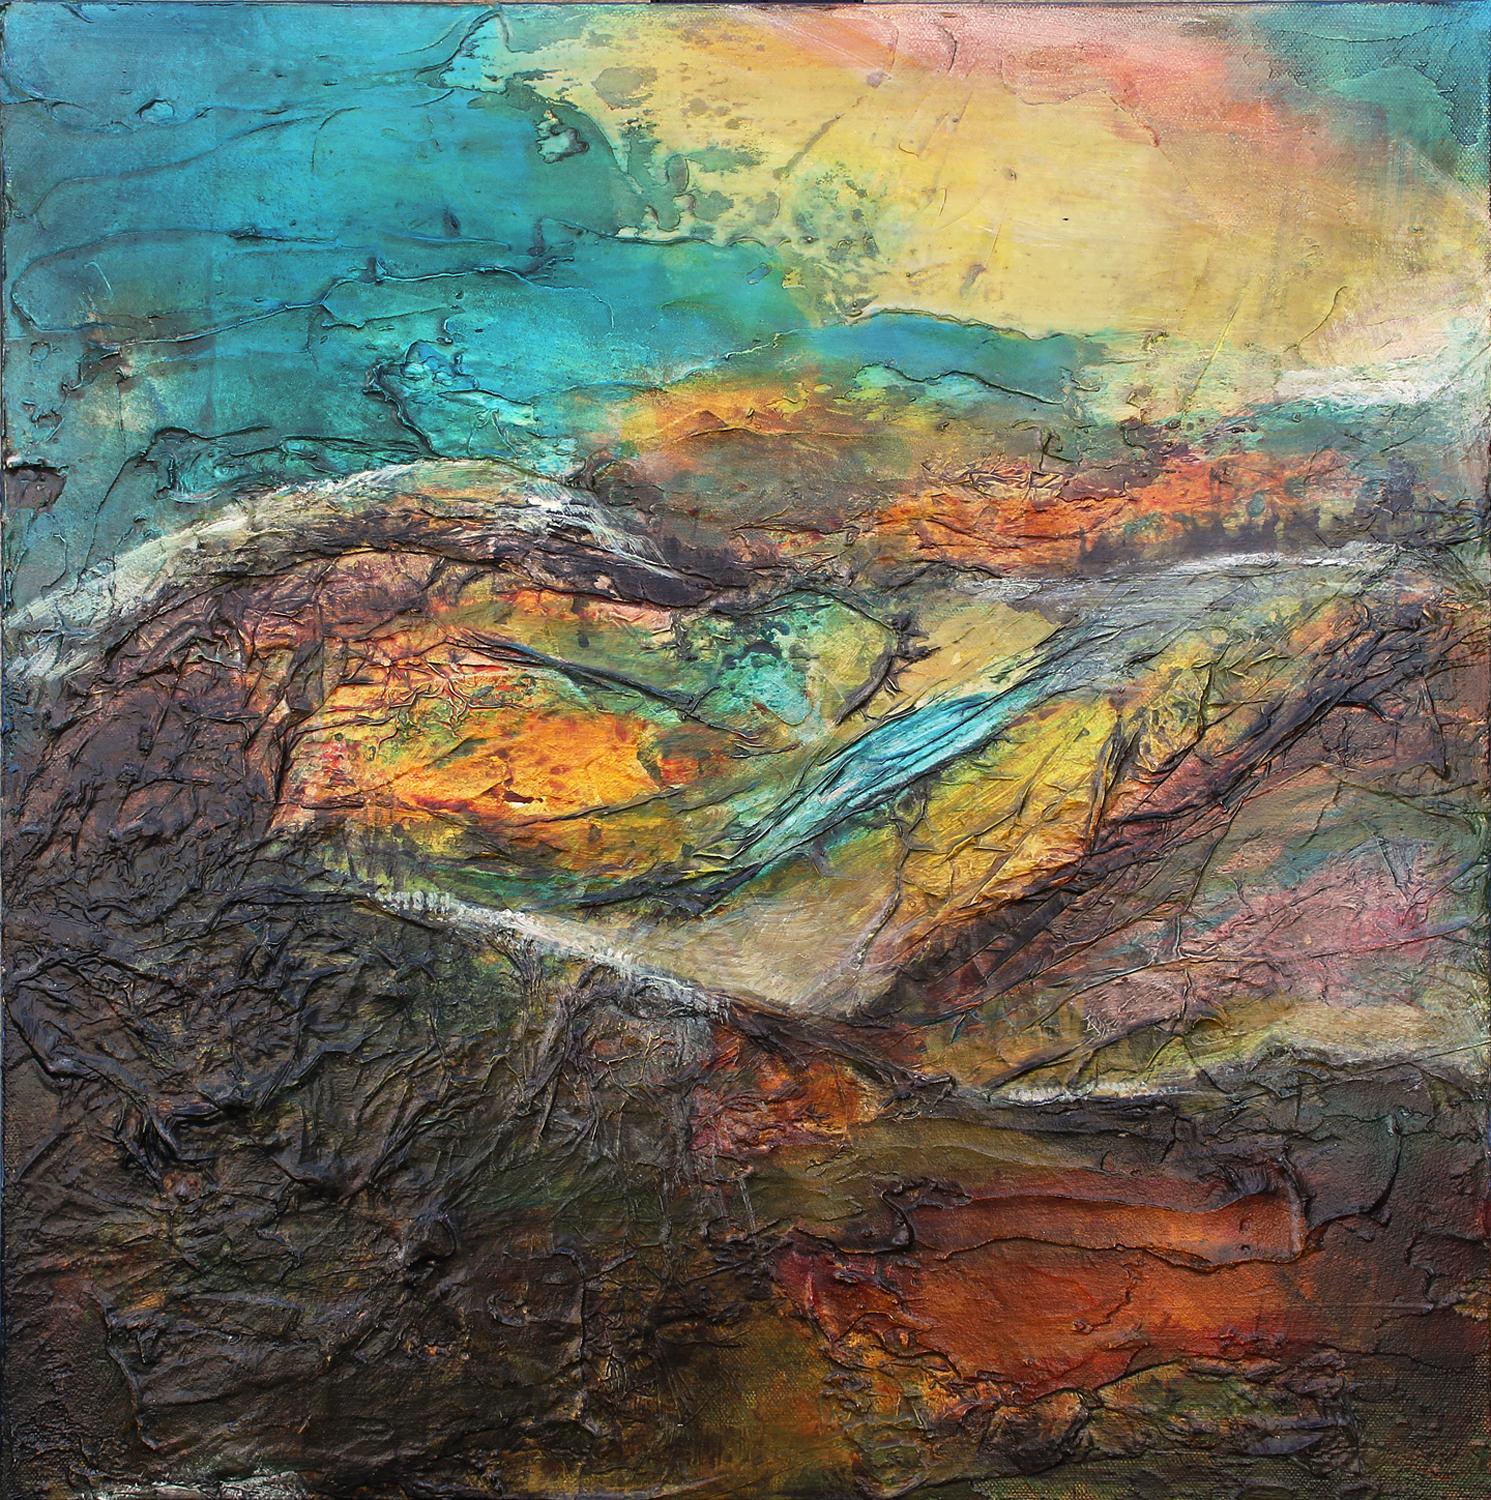 Terra Form, Abstract Painting - Mixed Media Art by Charles Kacin